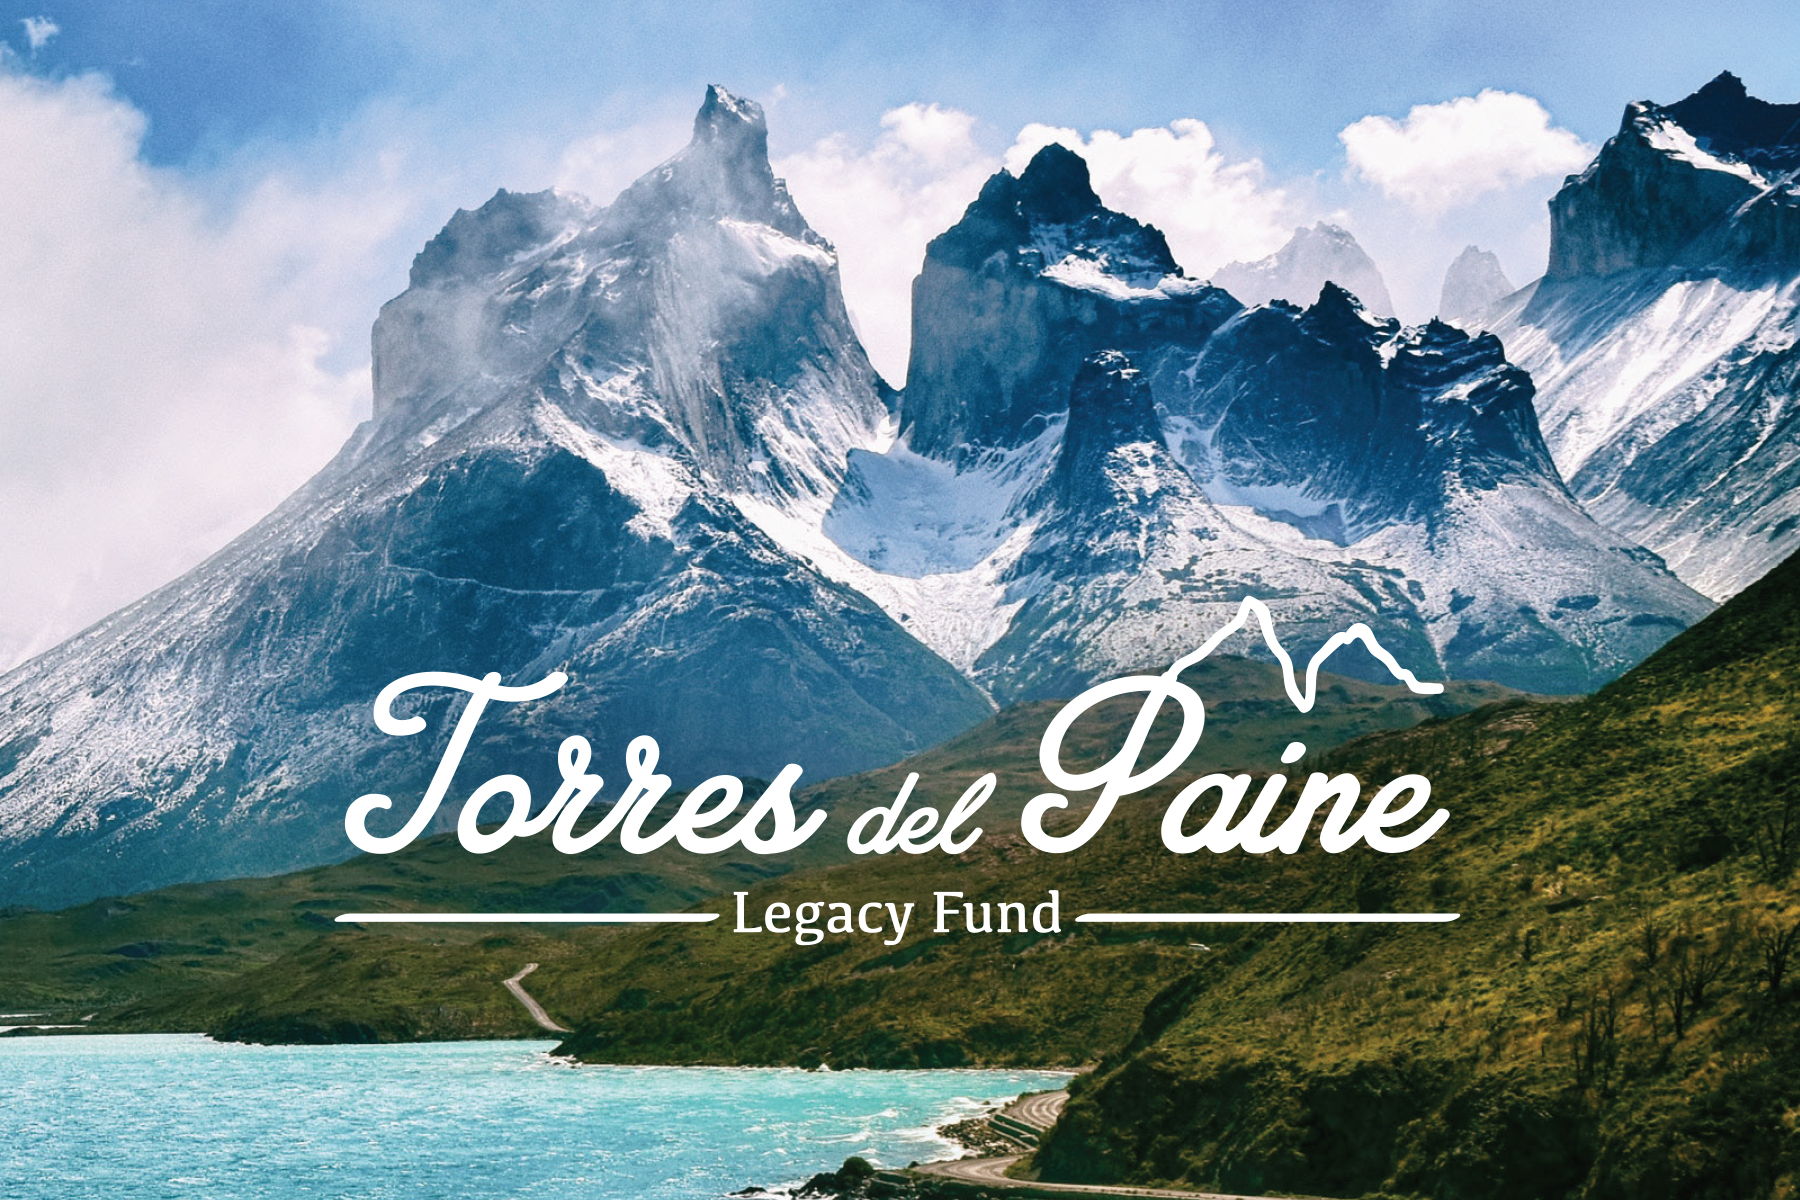 Torres del Paine Legacy Fund logo over Patagonia landscape